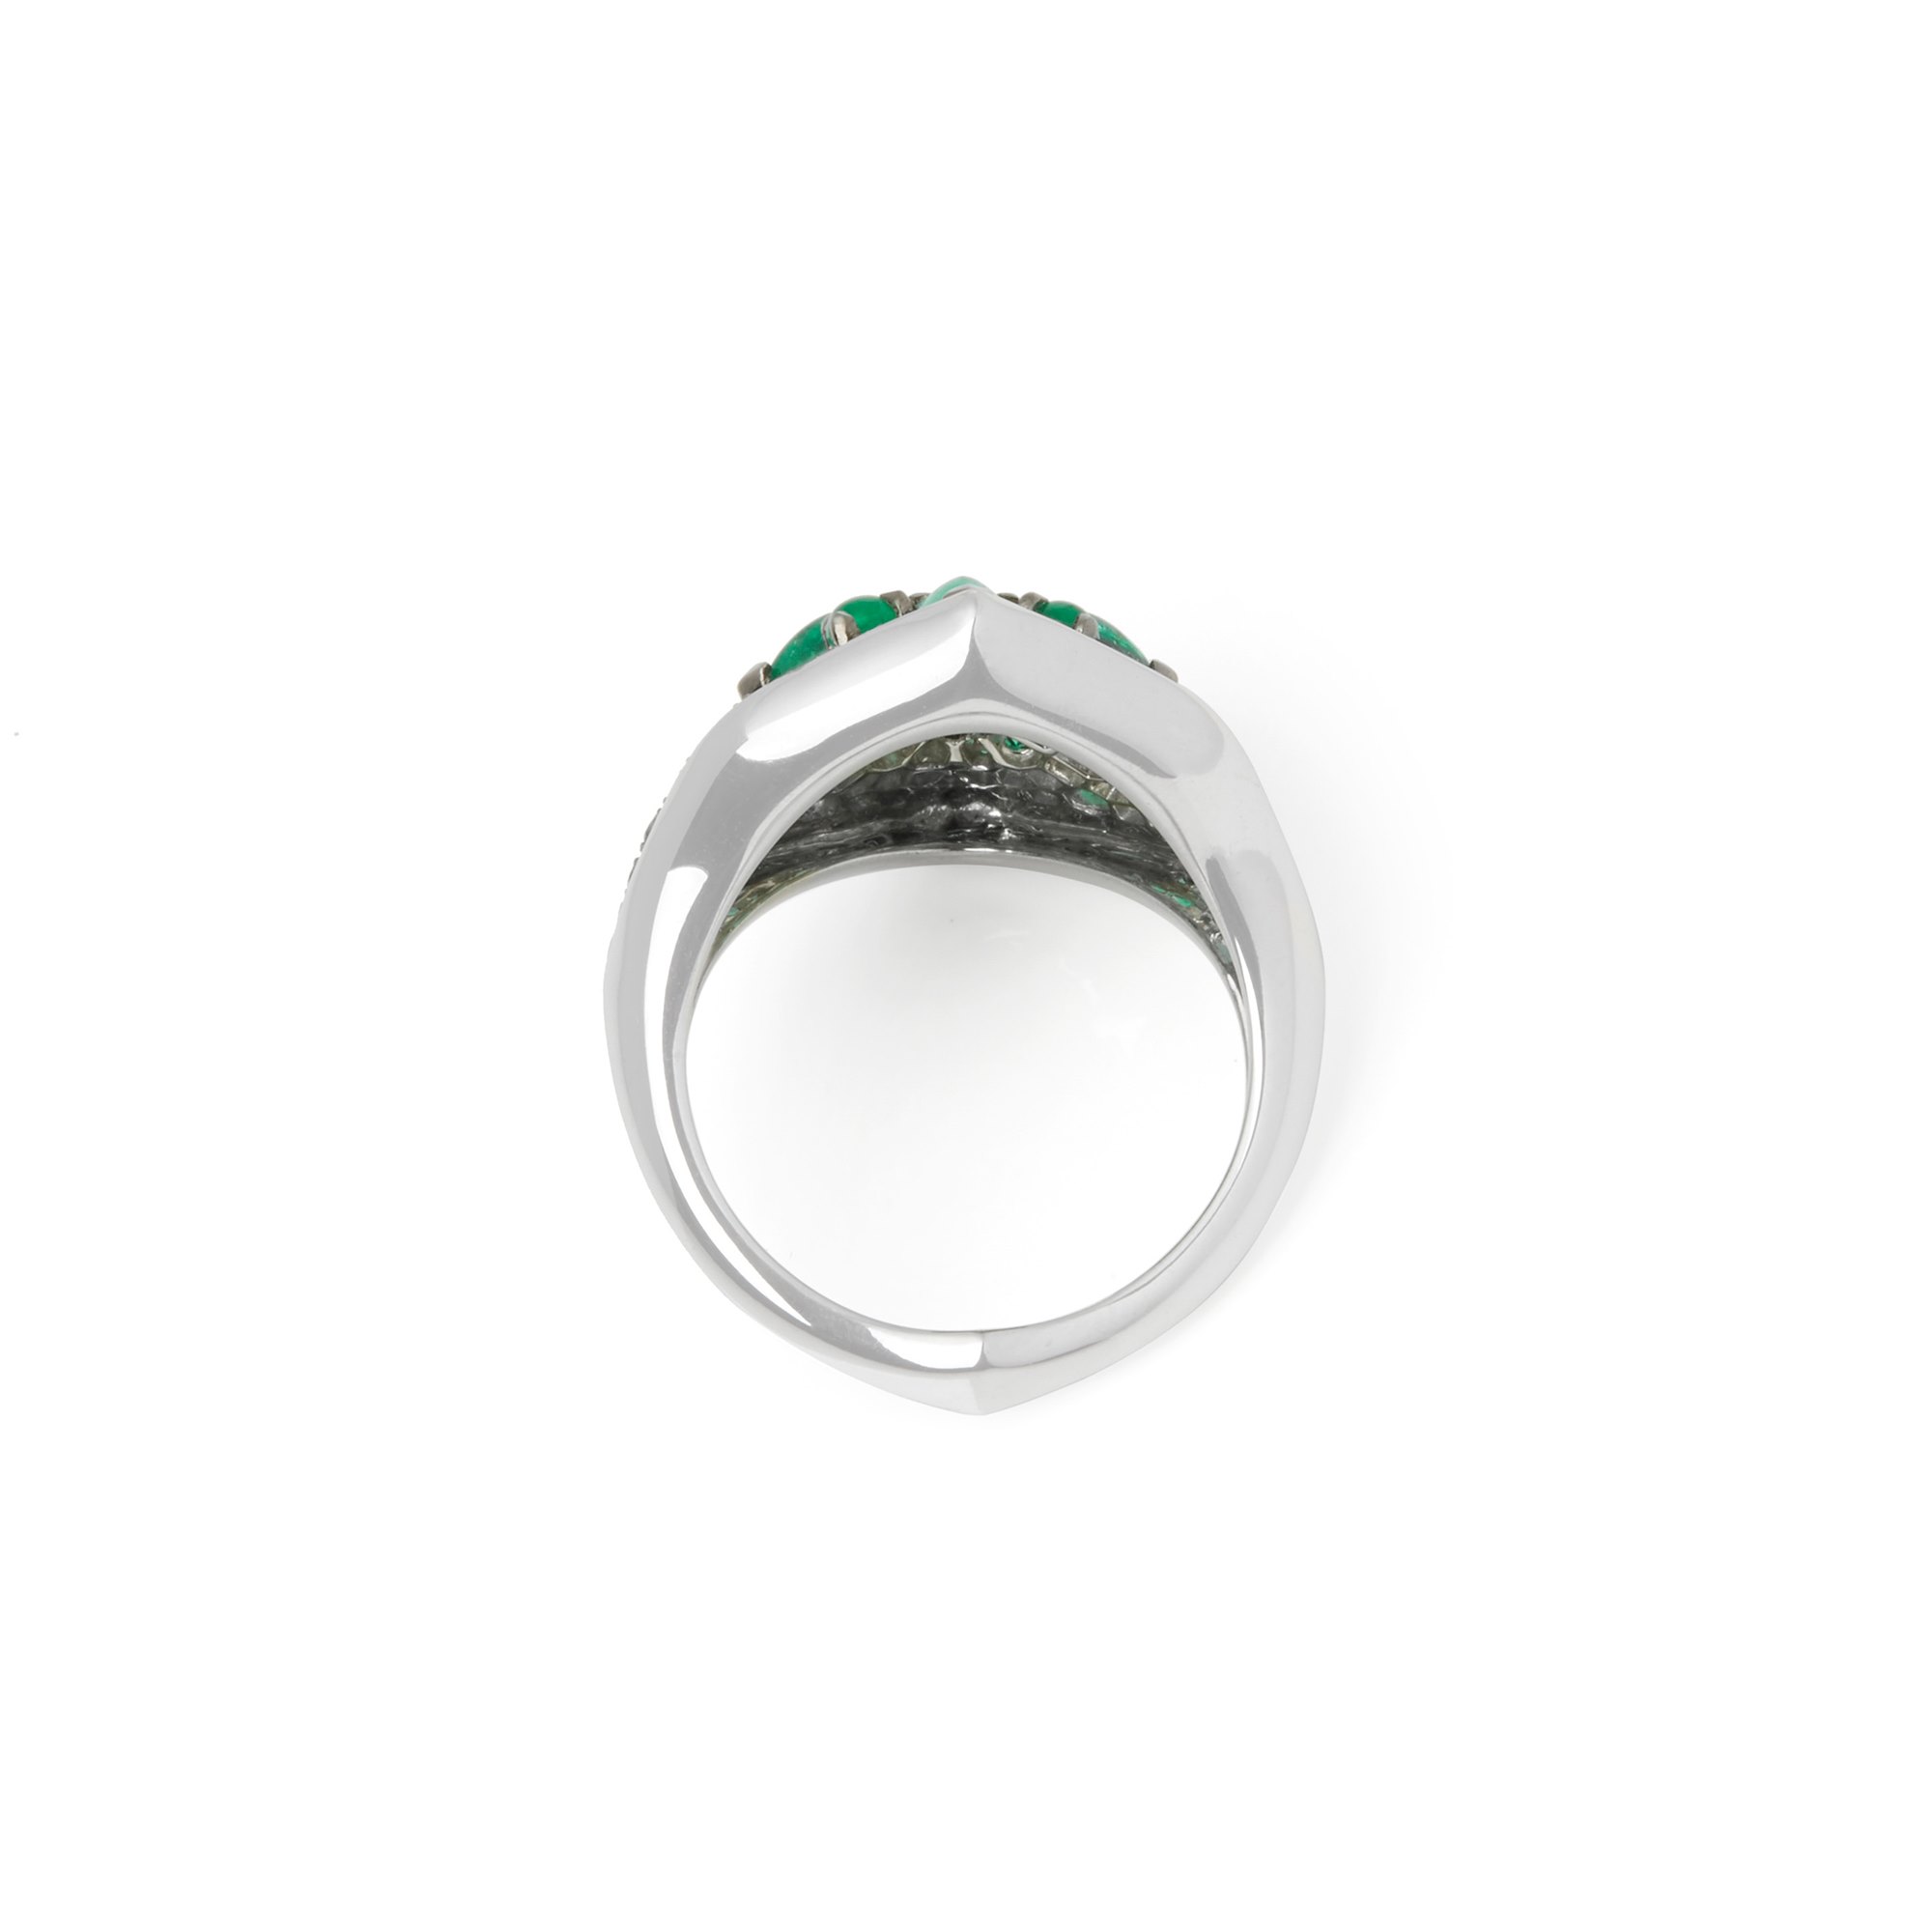 Stephen Webster 18ct White Gold Belle Epoque Emerald Ring